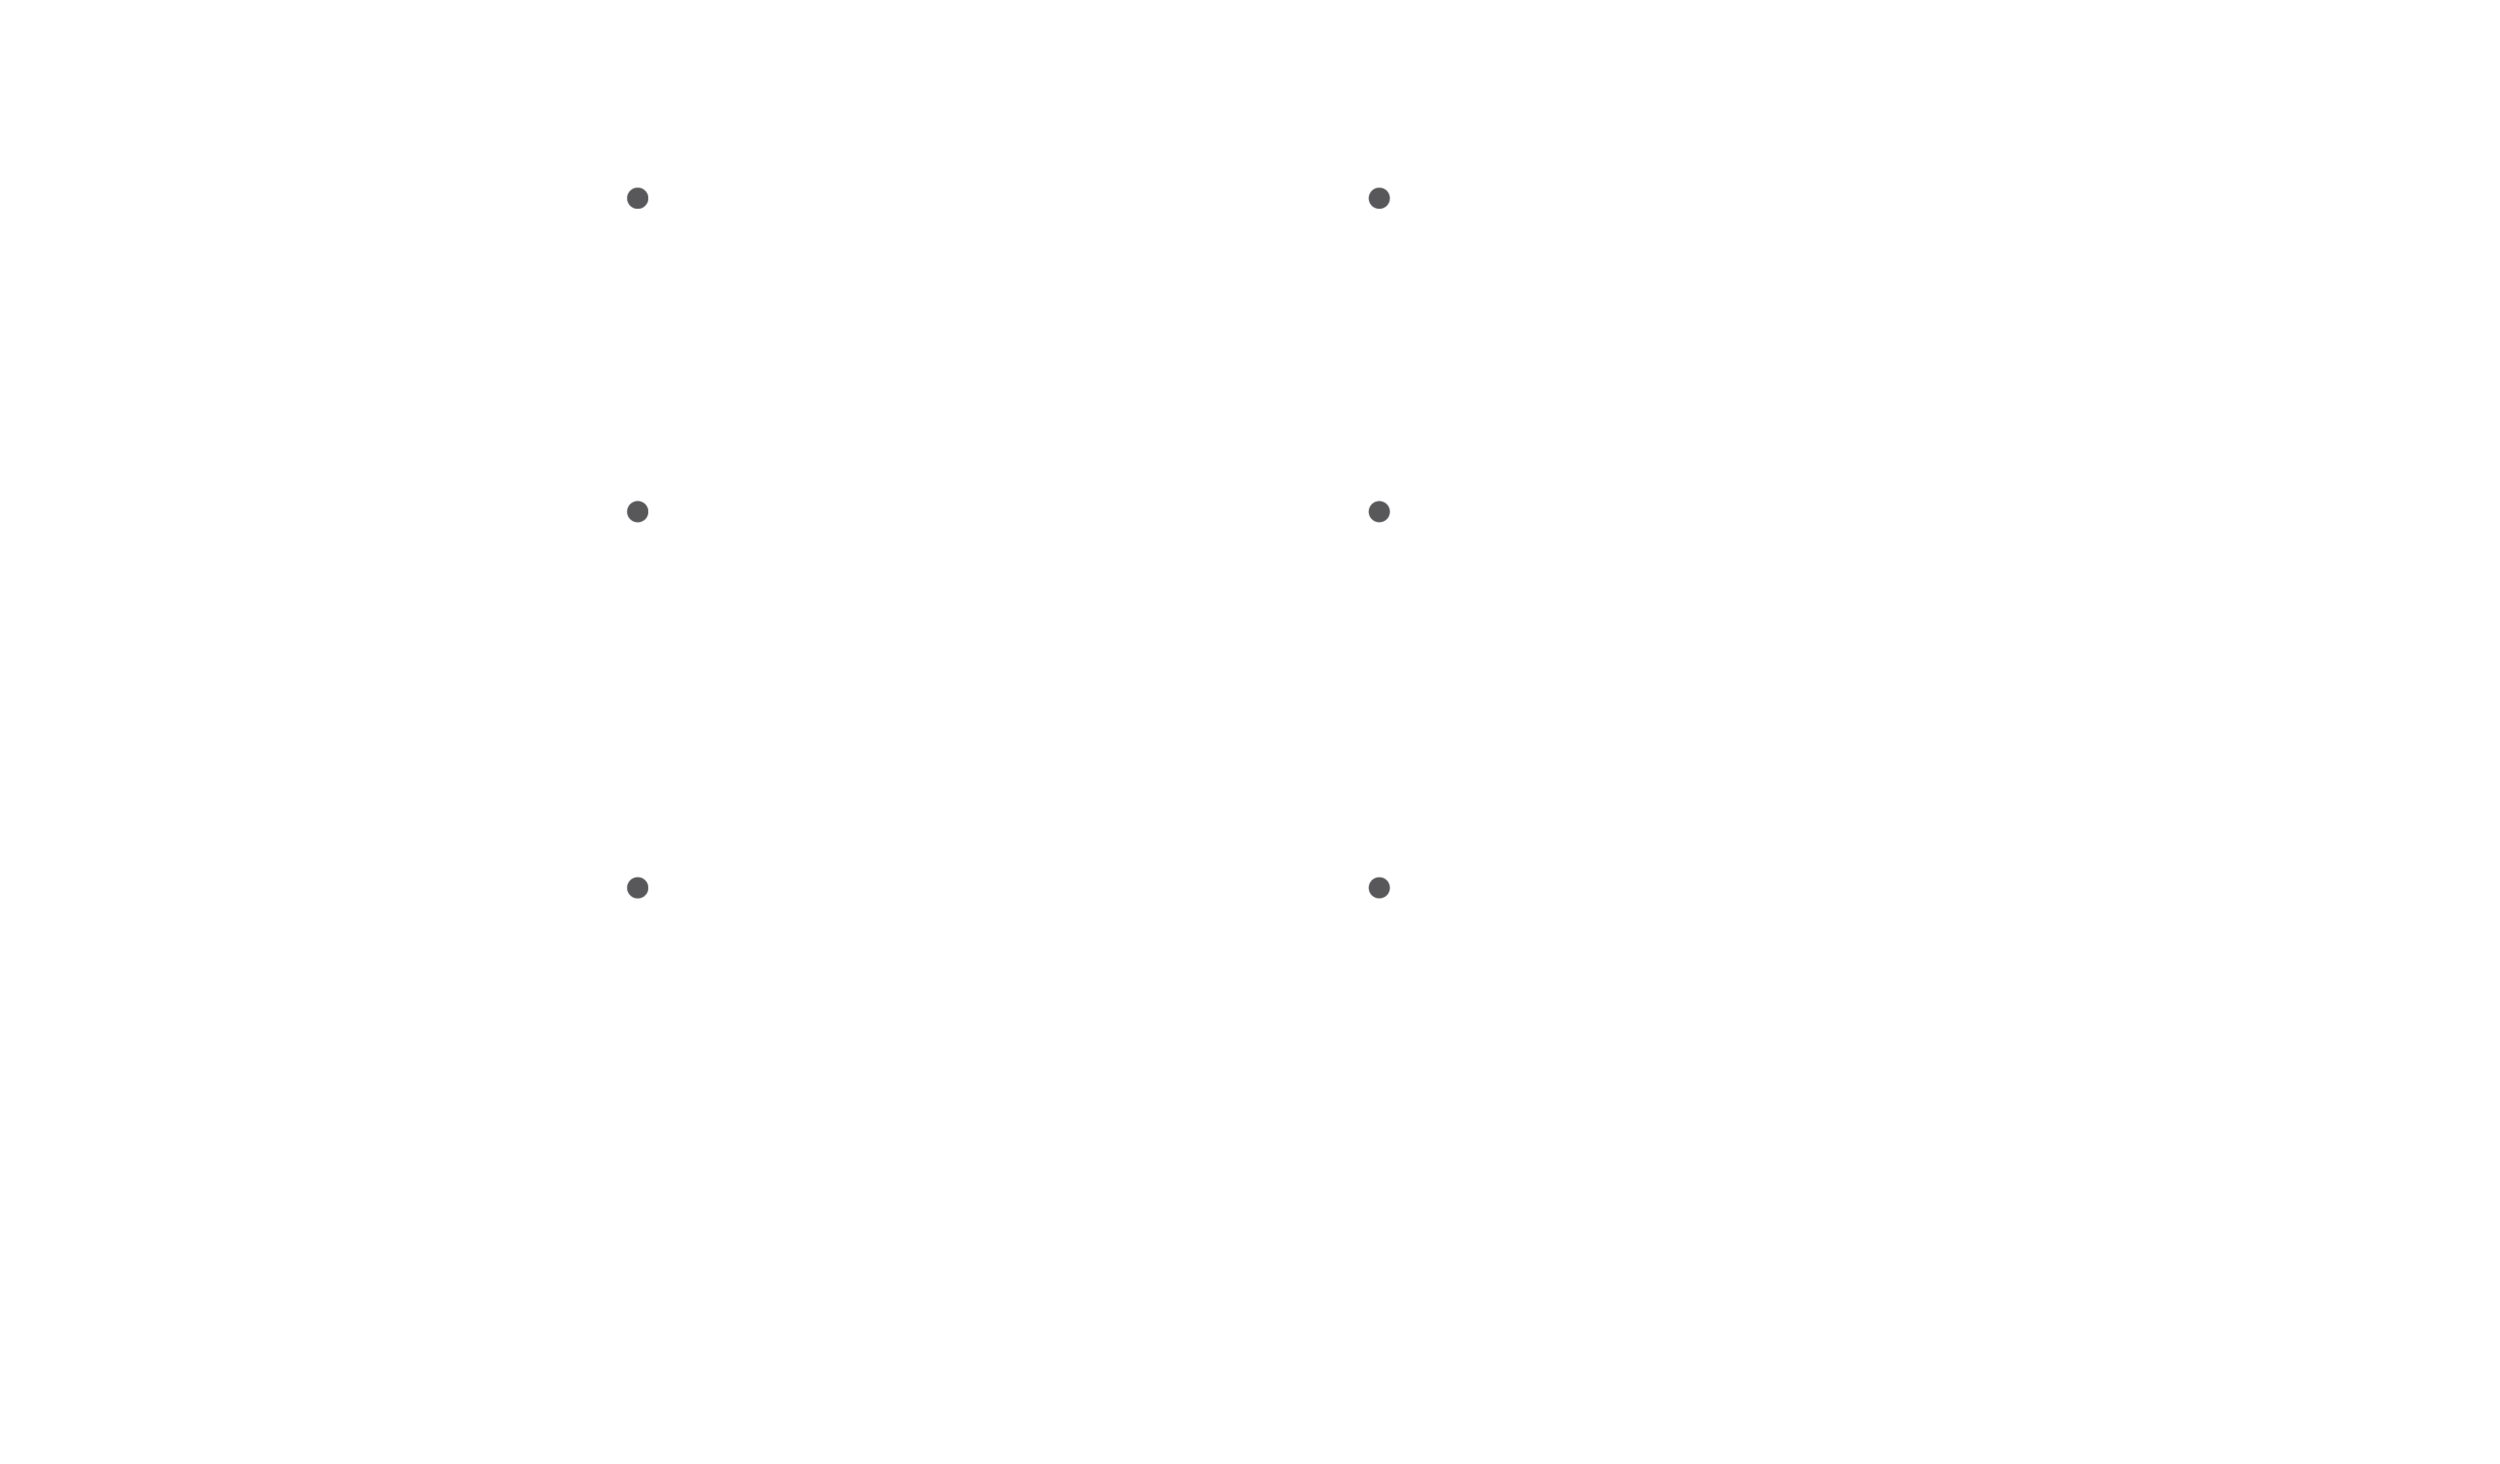 Kyneton Fencing